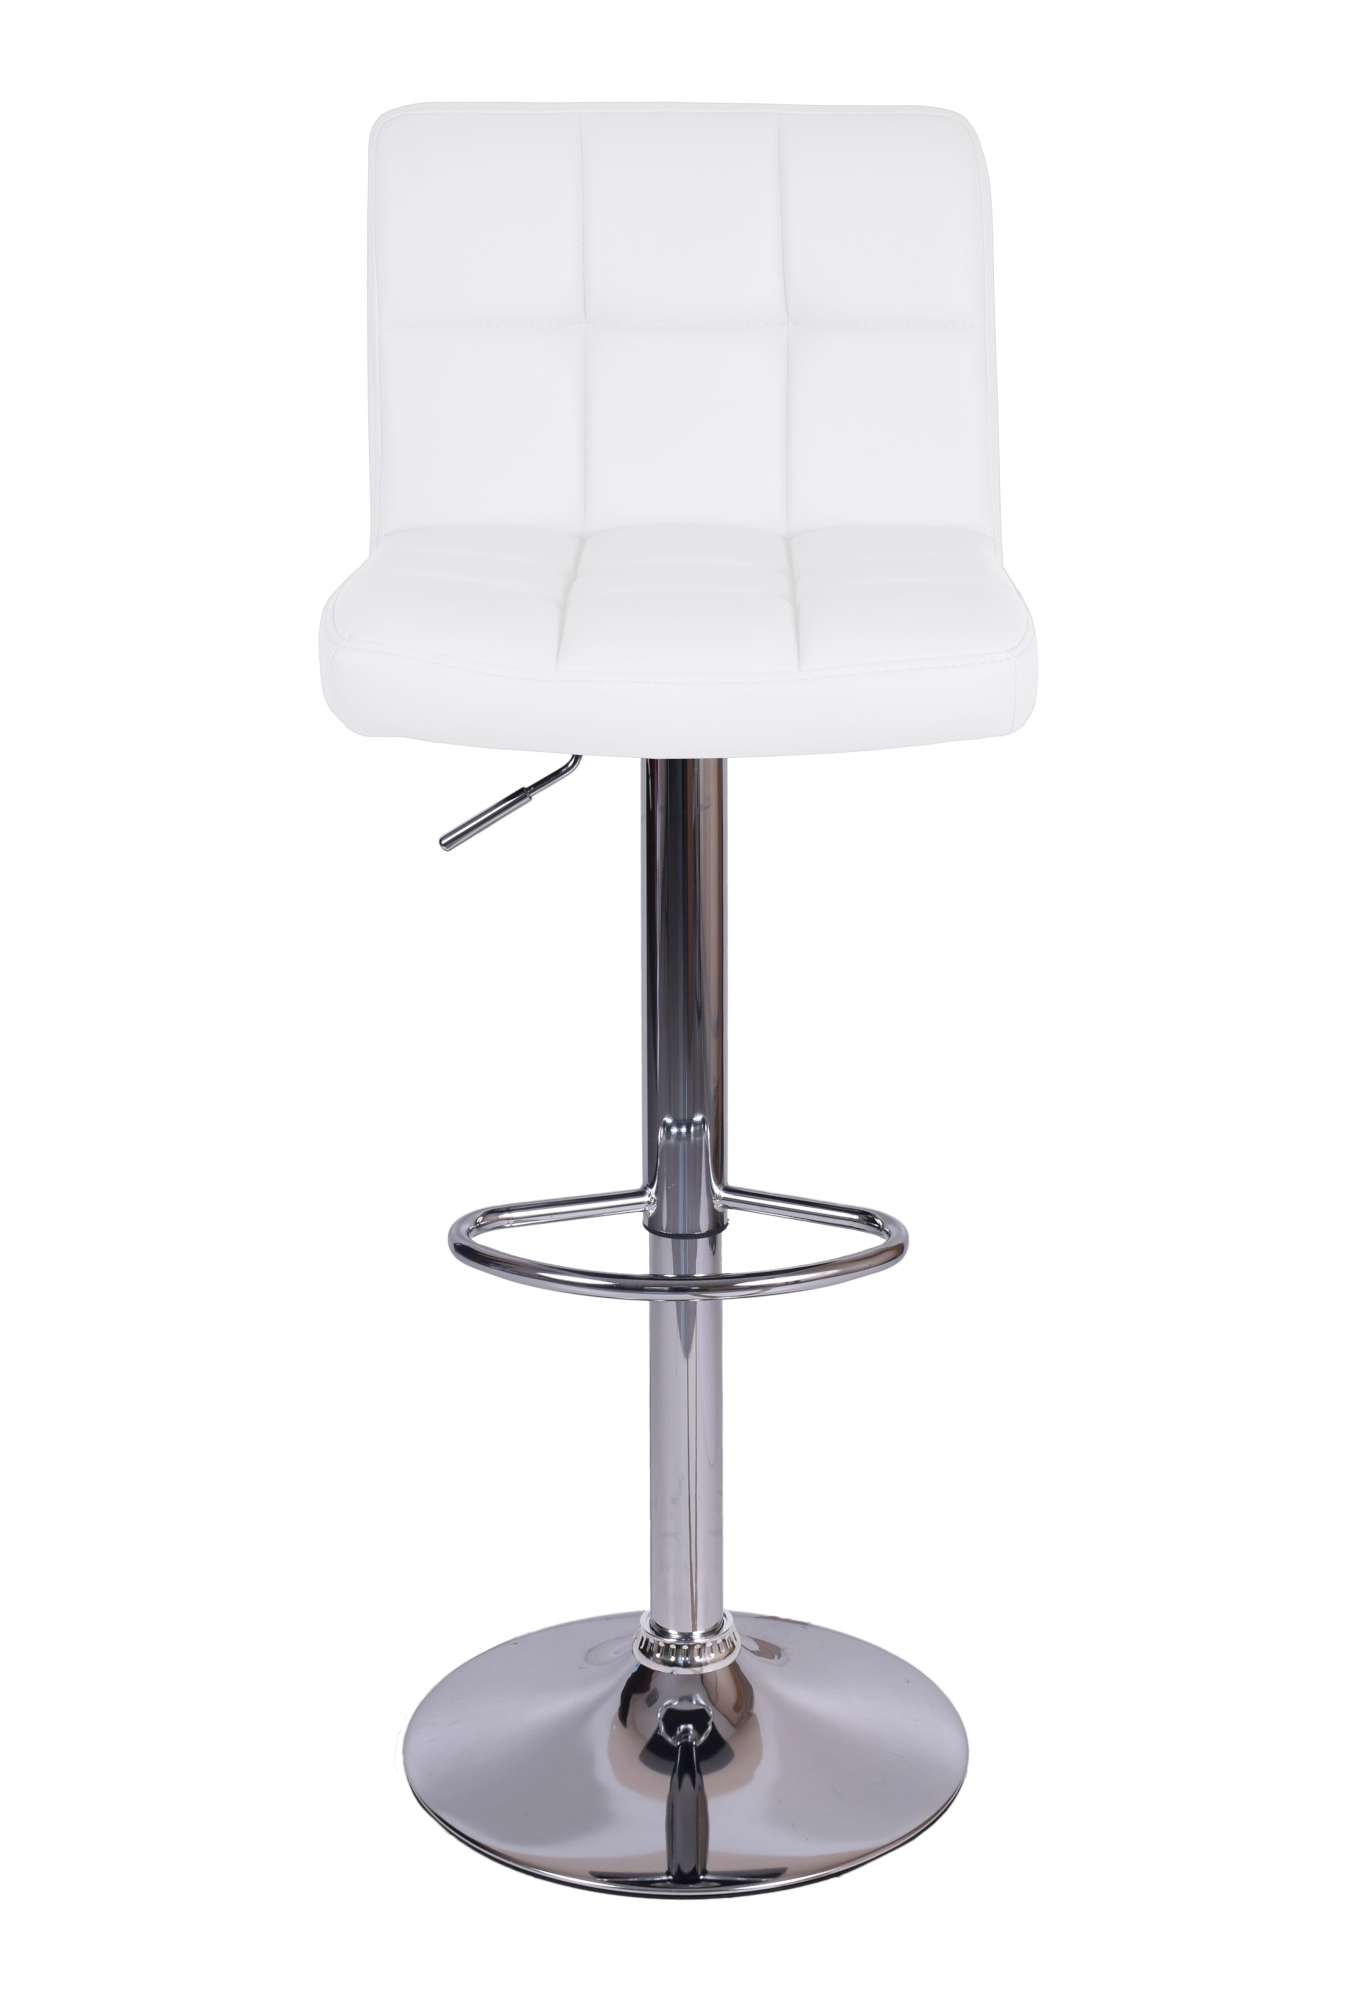 Hoker krzesło barowe ARAKO białe